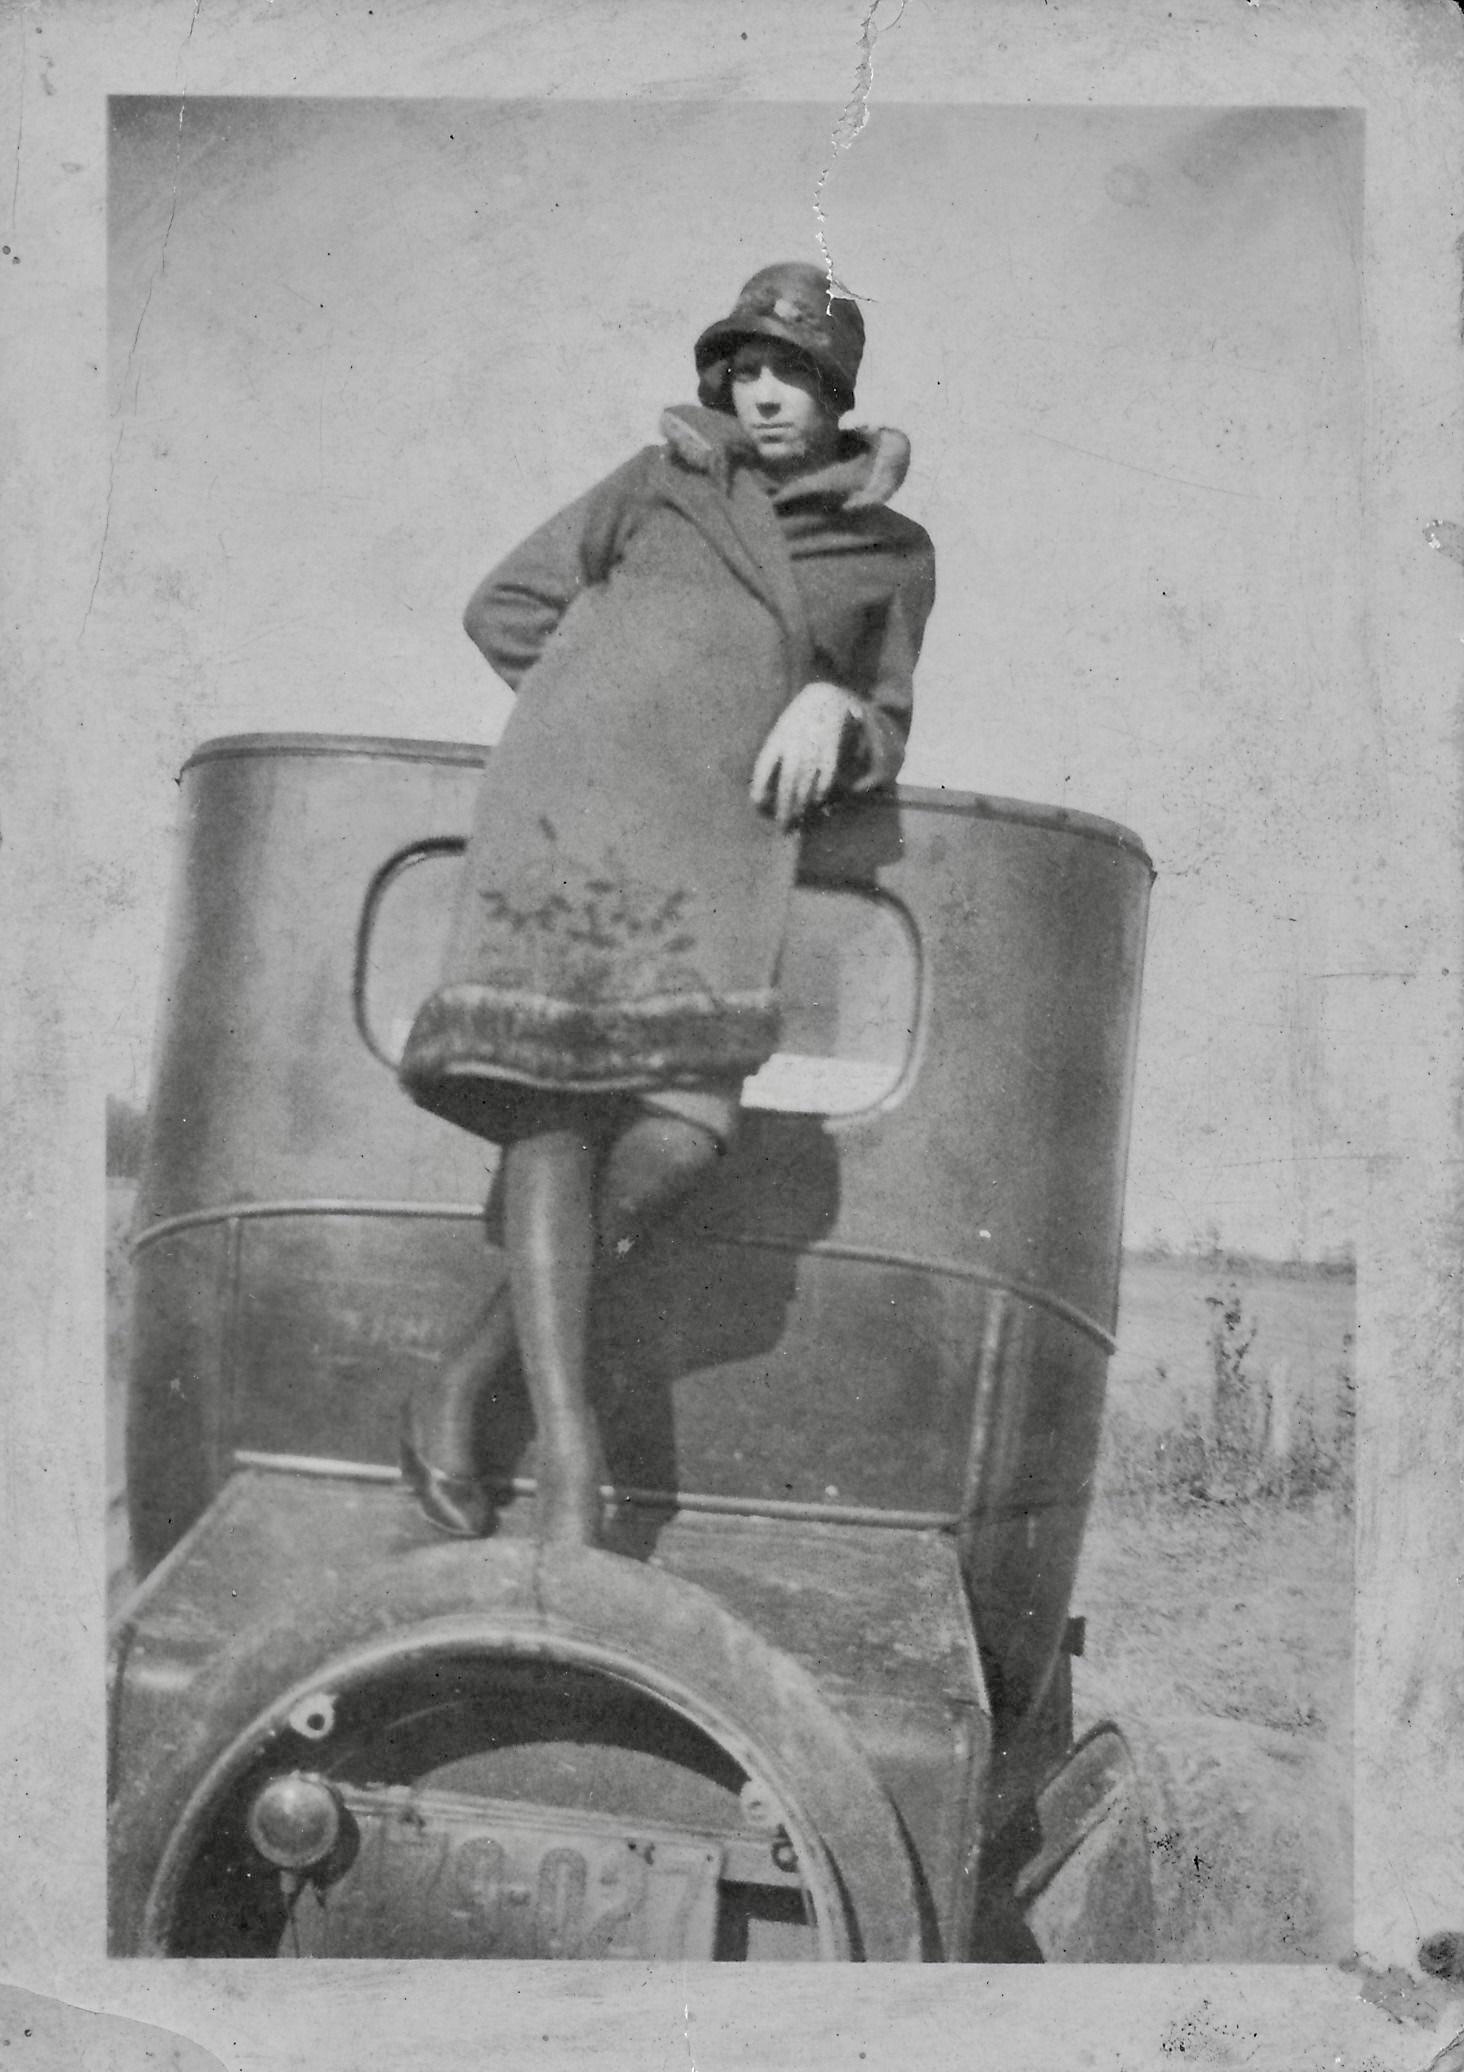 'Our first car'. 1920s, Missouri, I think.jpeg